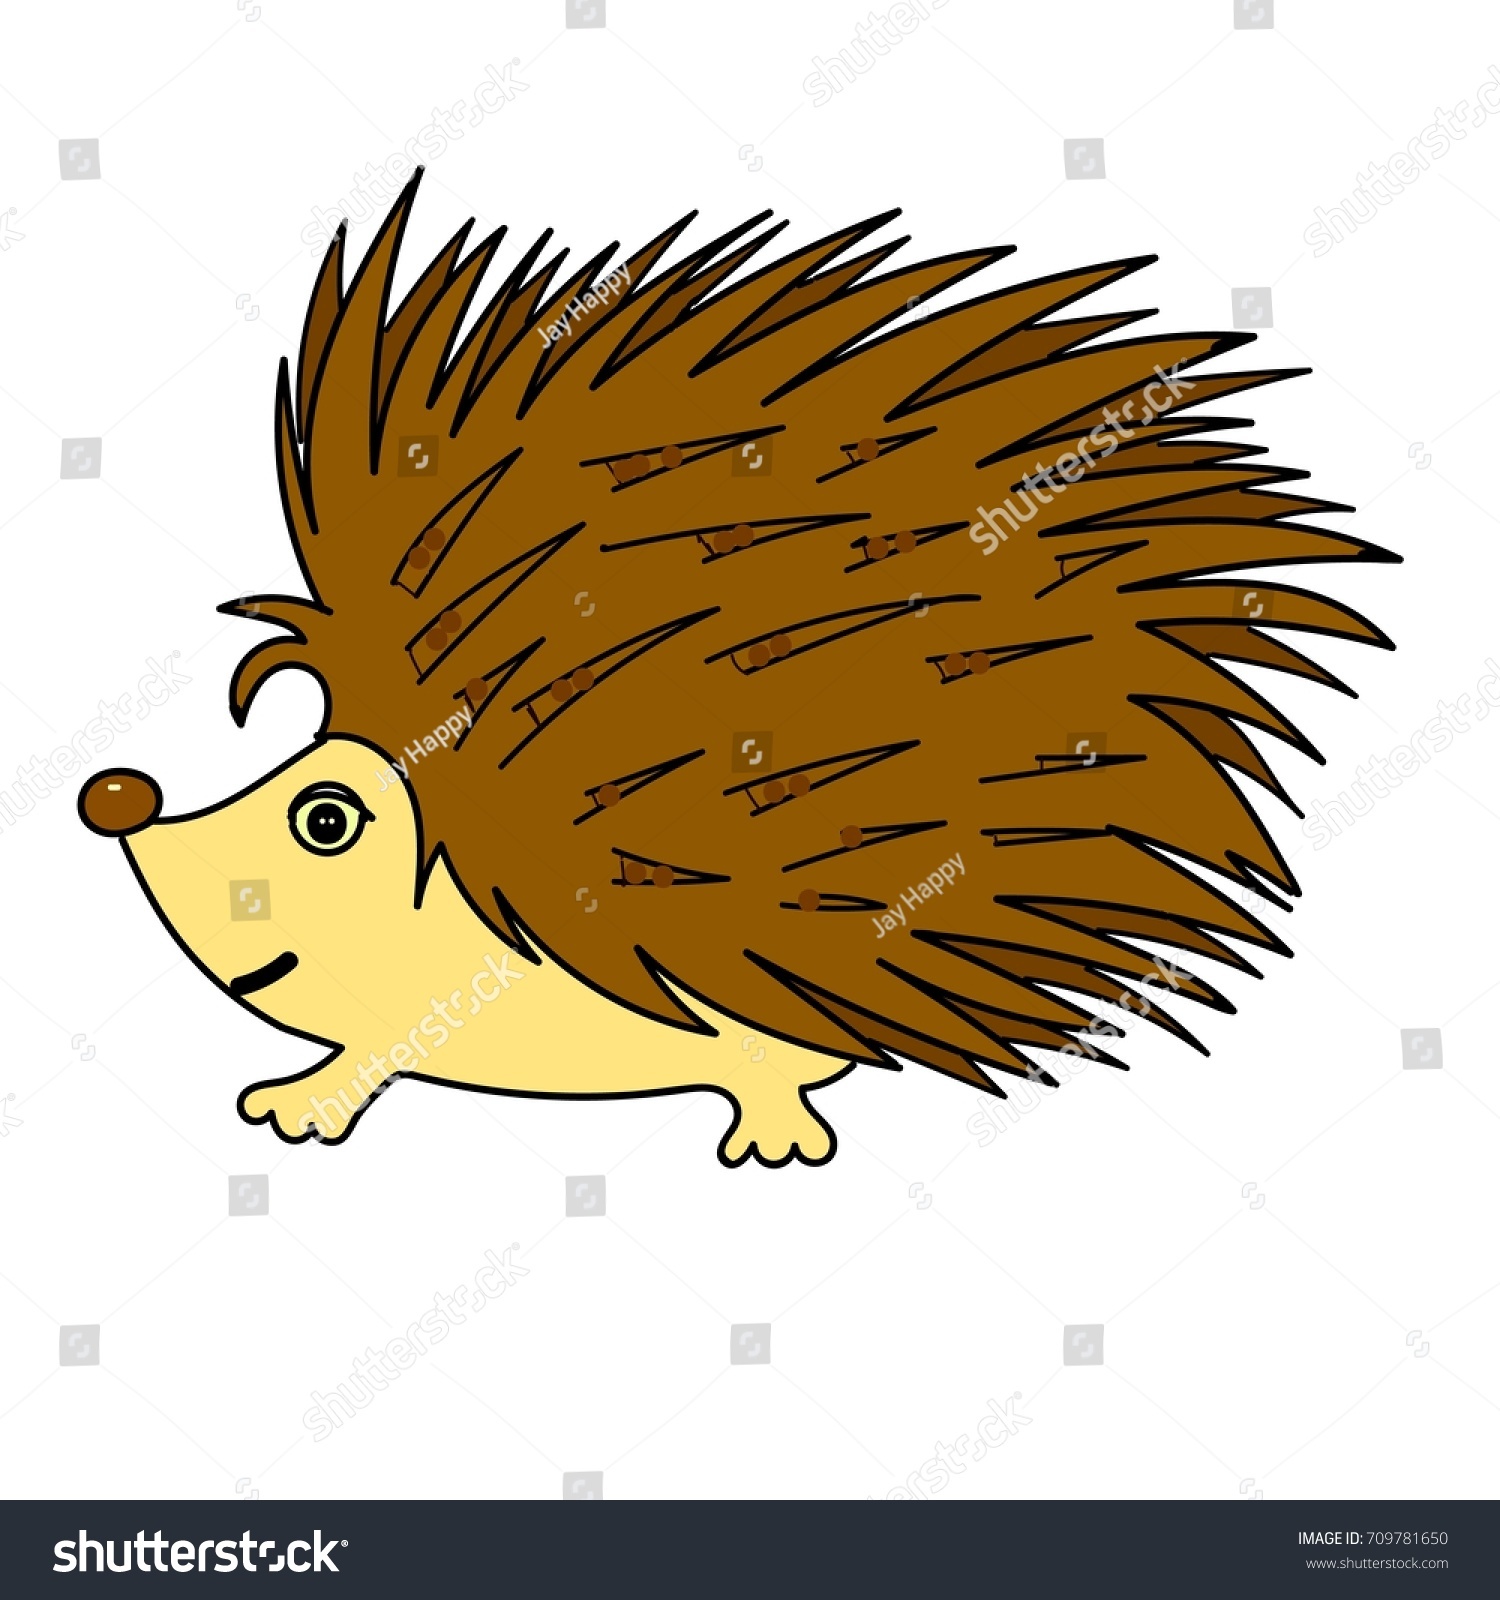 Porcupine Quills Cartoon Funny Animal Art Stock Vector 709781650 ...